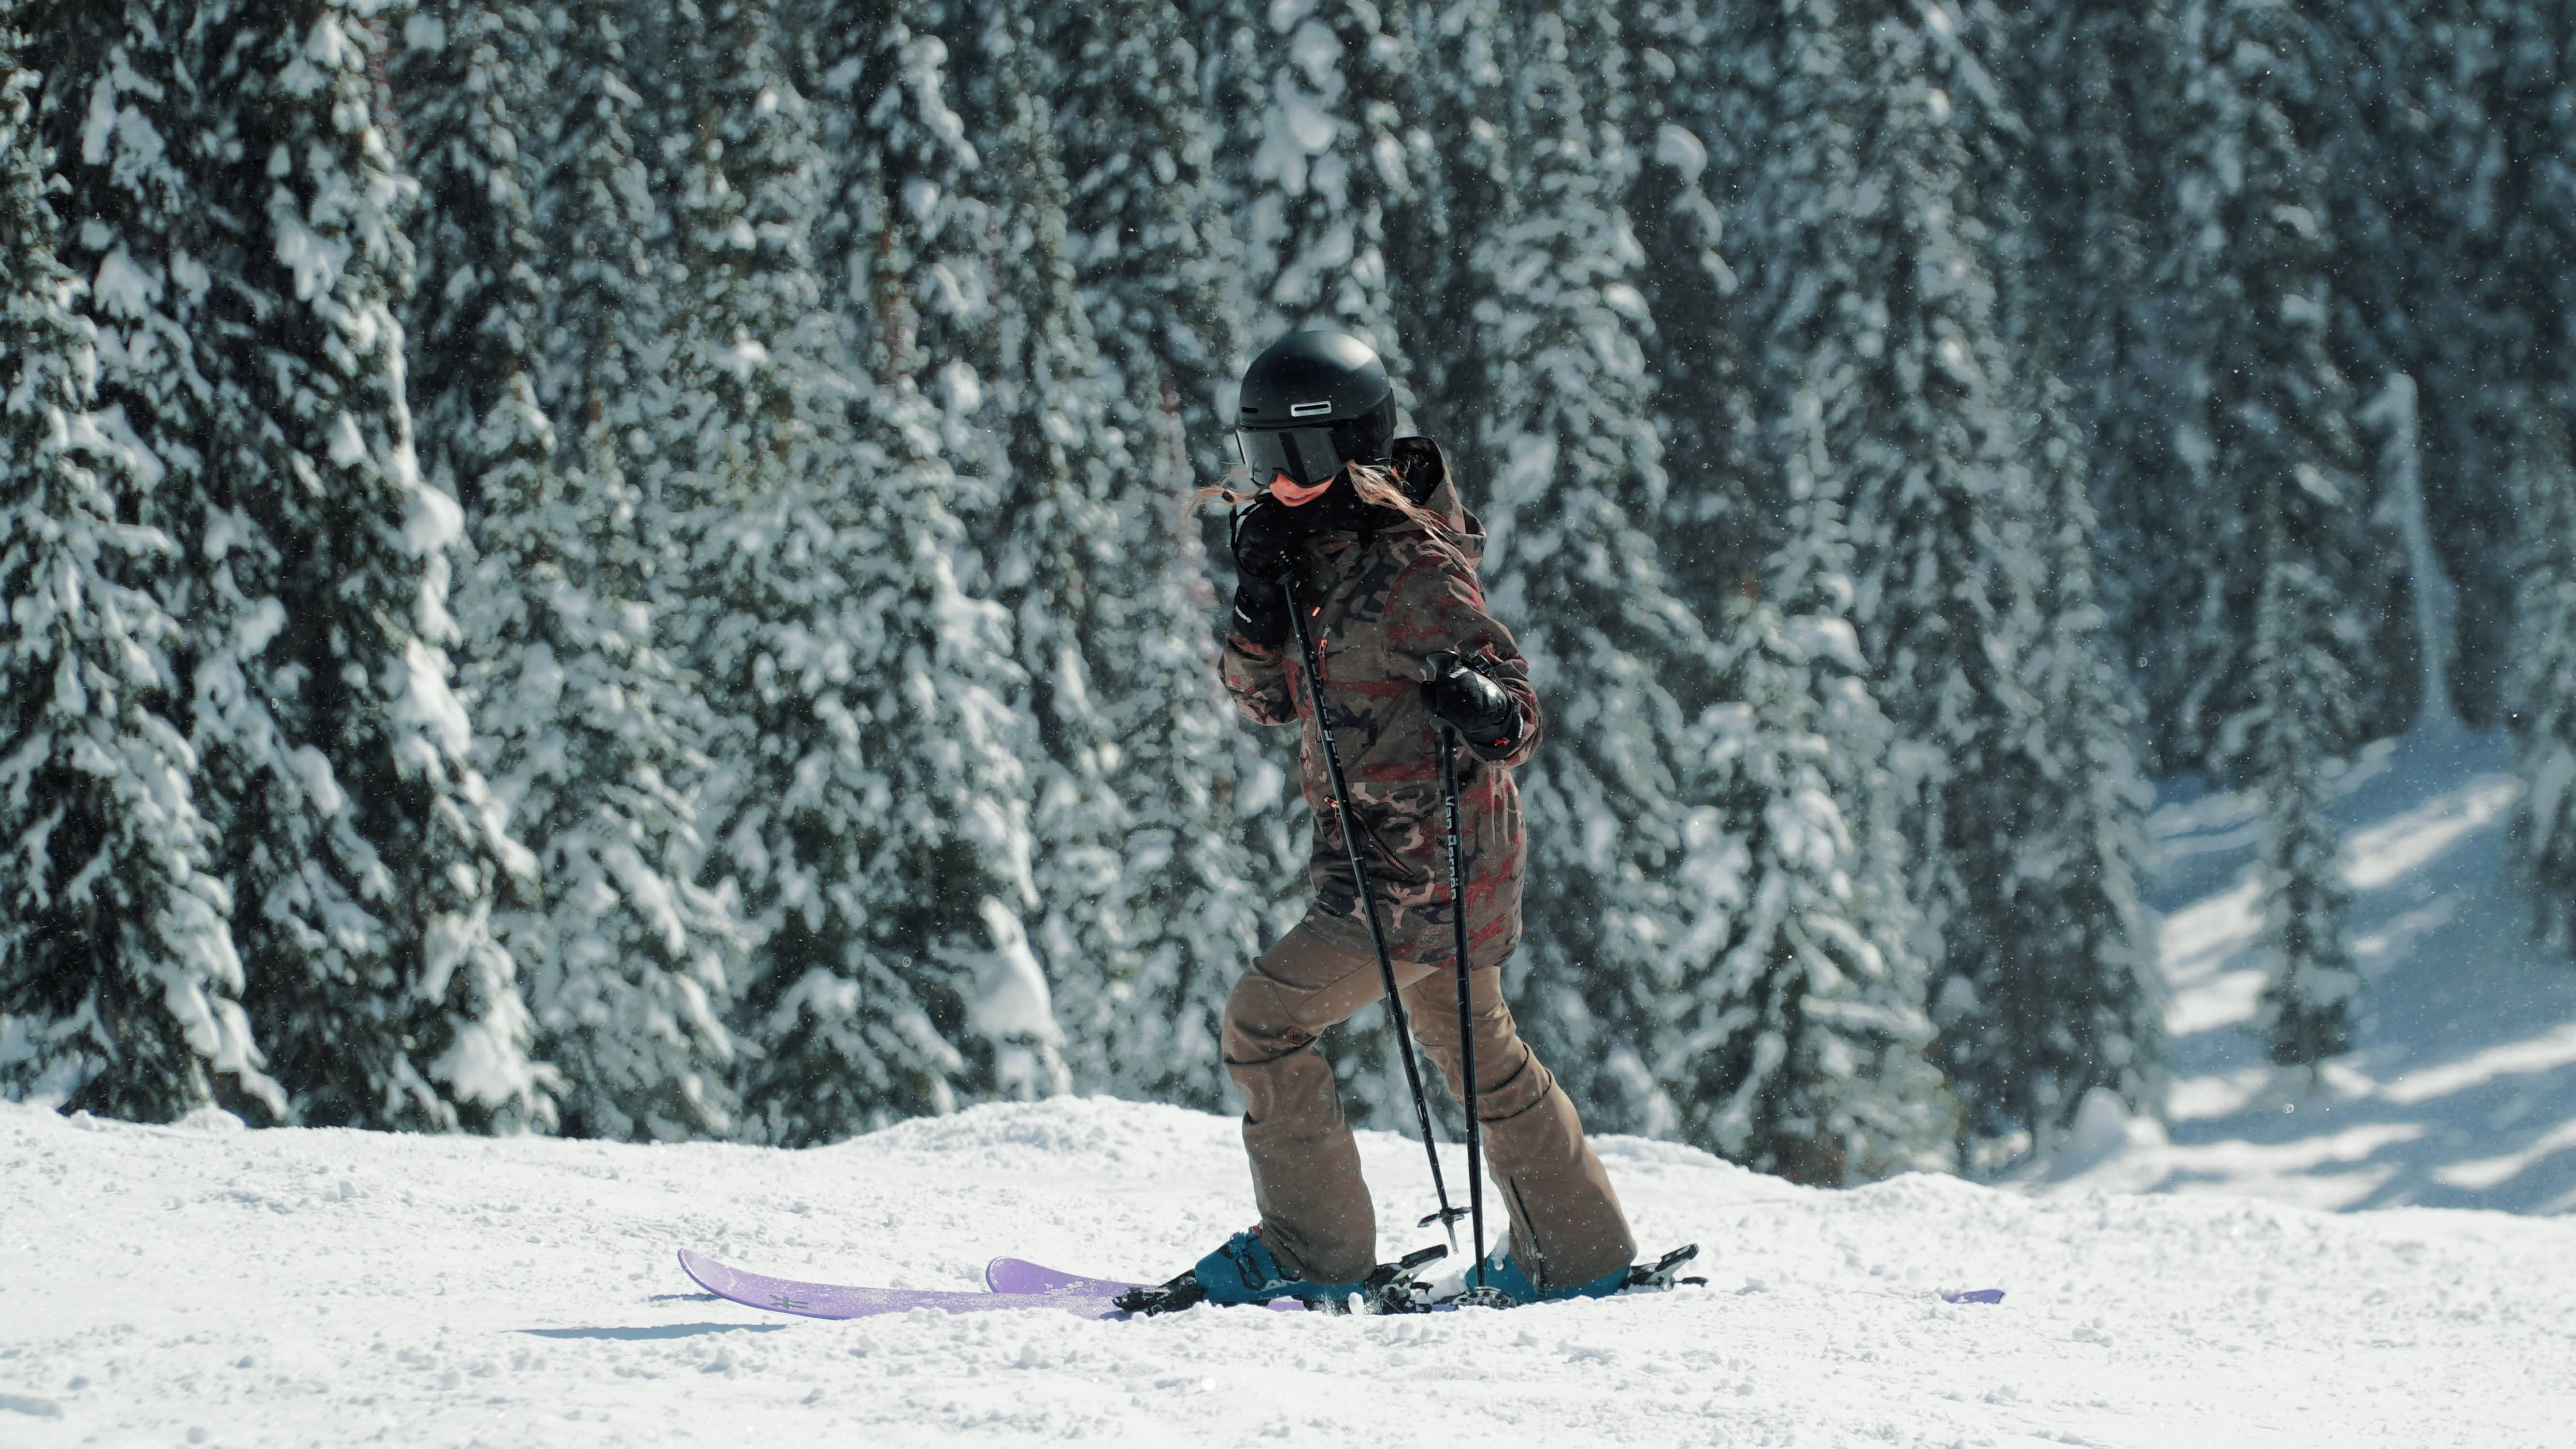 Lady skiing in Revelstoke, BC, Canada